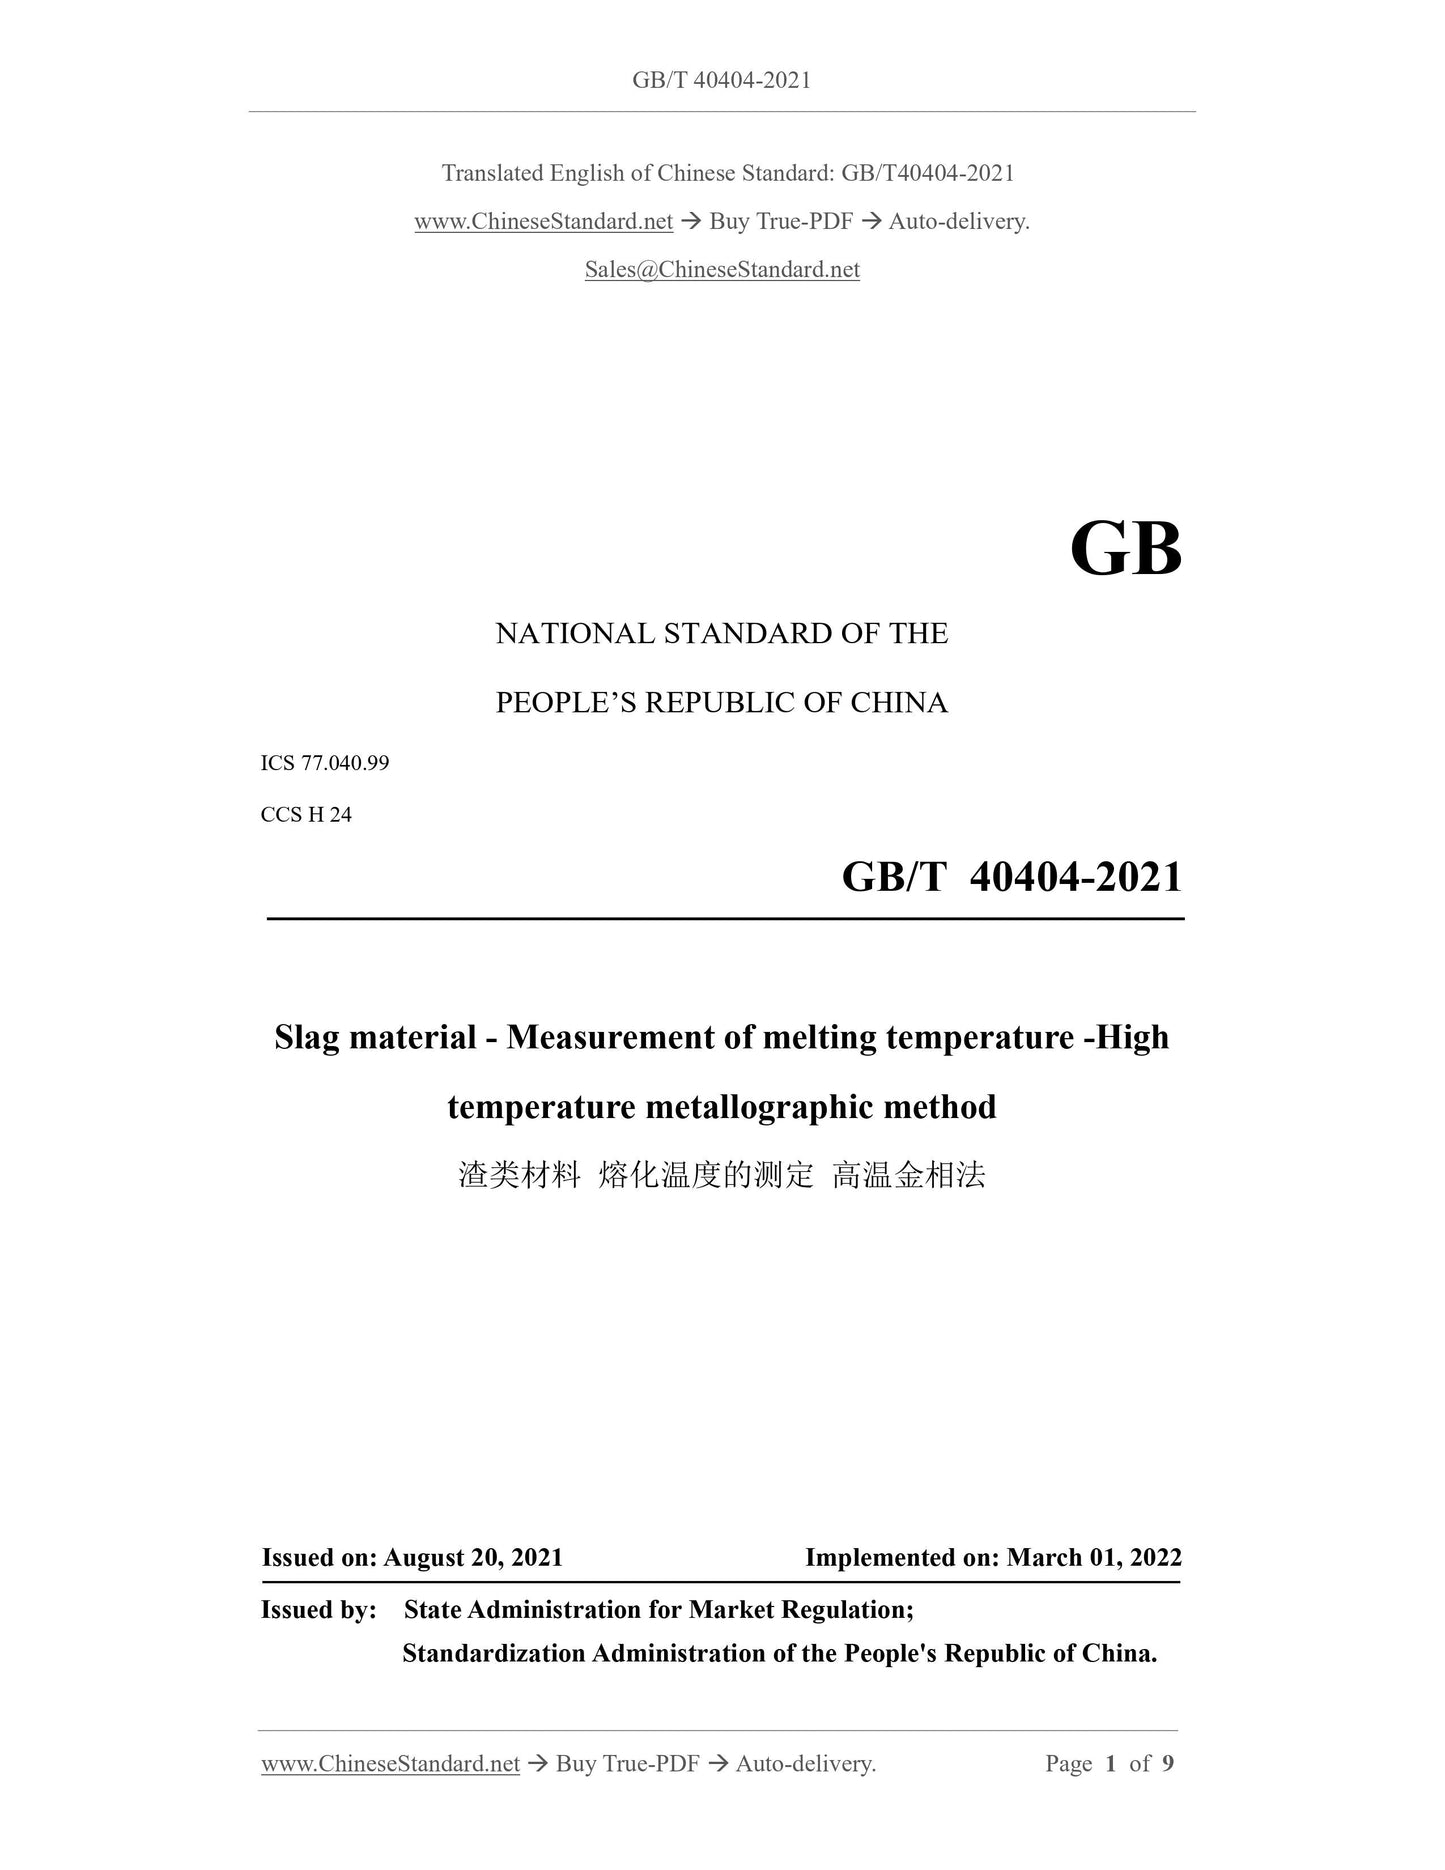 GBT40404-2021 Page 1